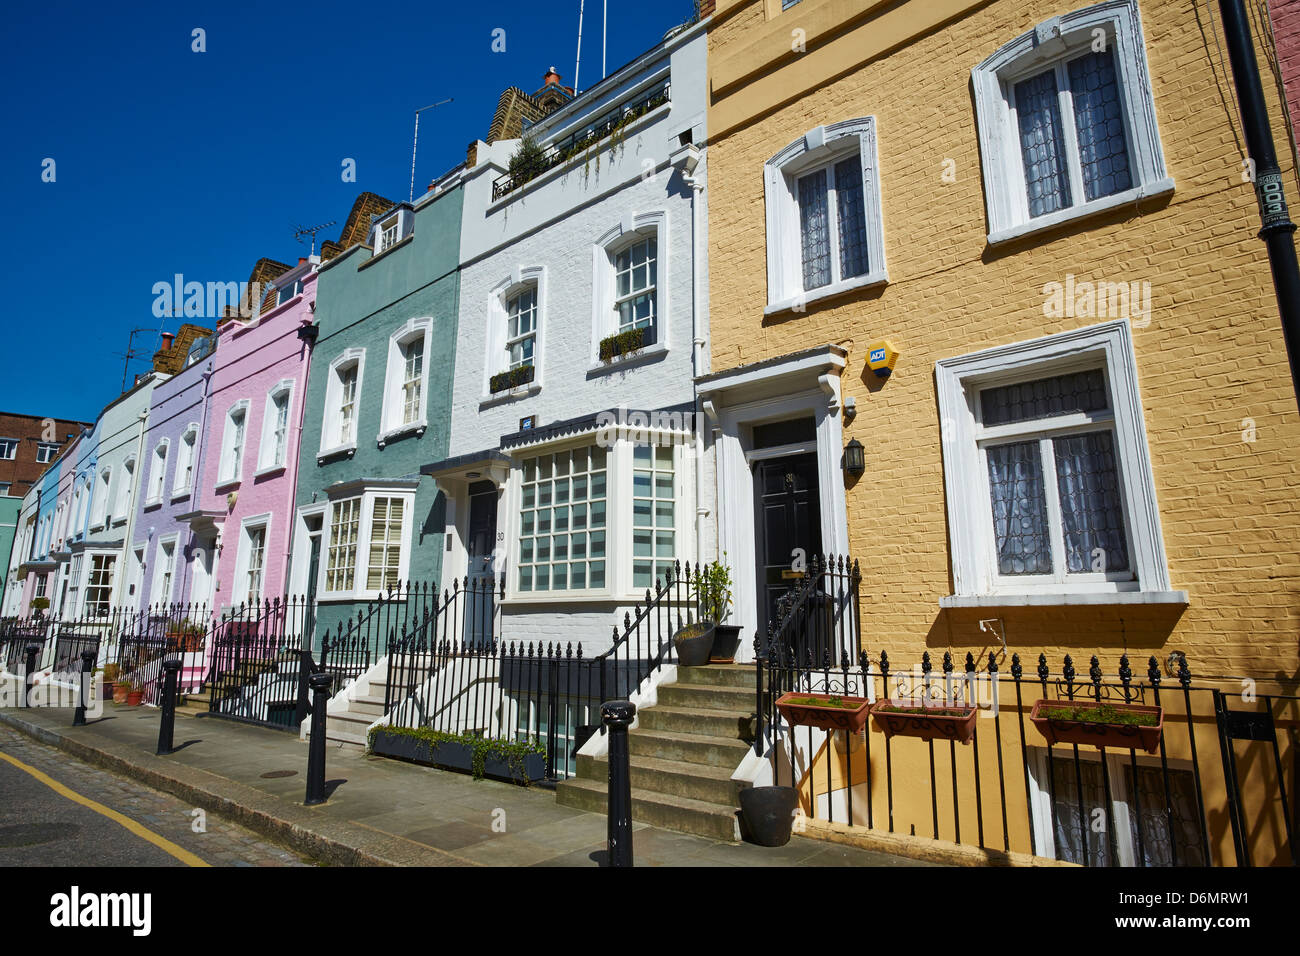 Price uk. Terraced House в Великобритании. A Terrace House в Англии. Италия terraced House. Сплошные дома в Великобритании.